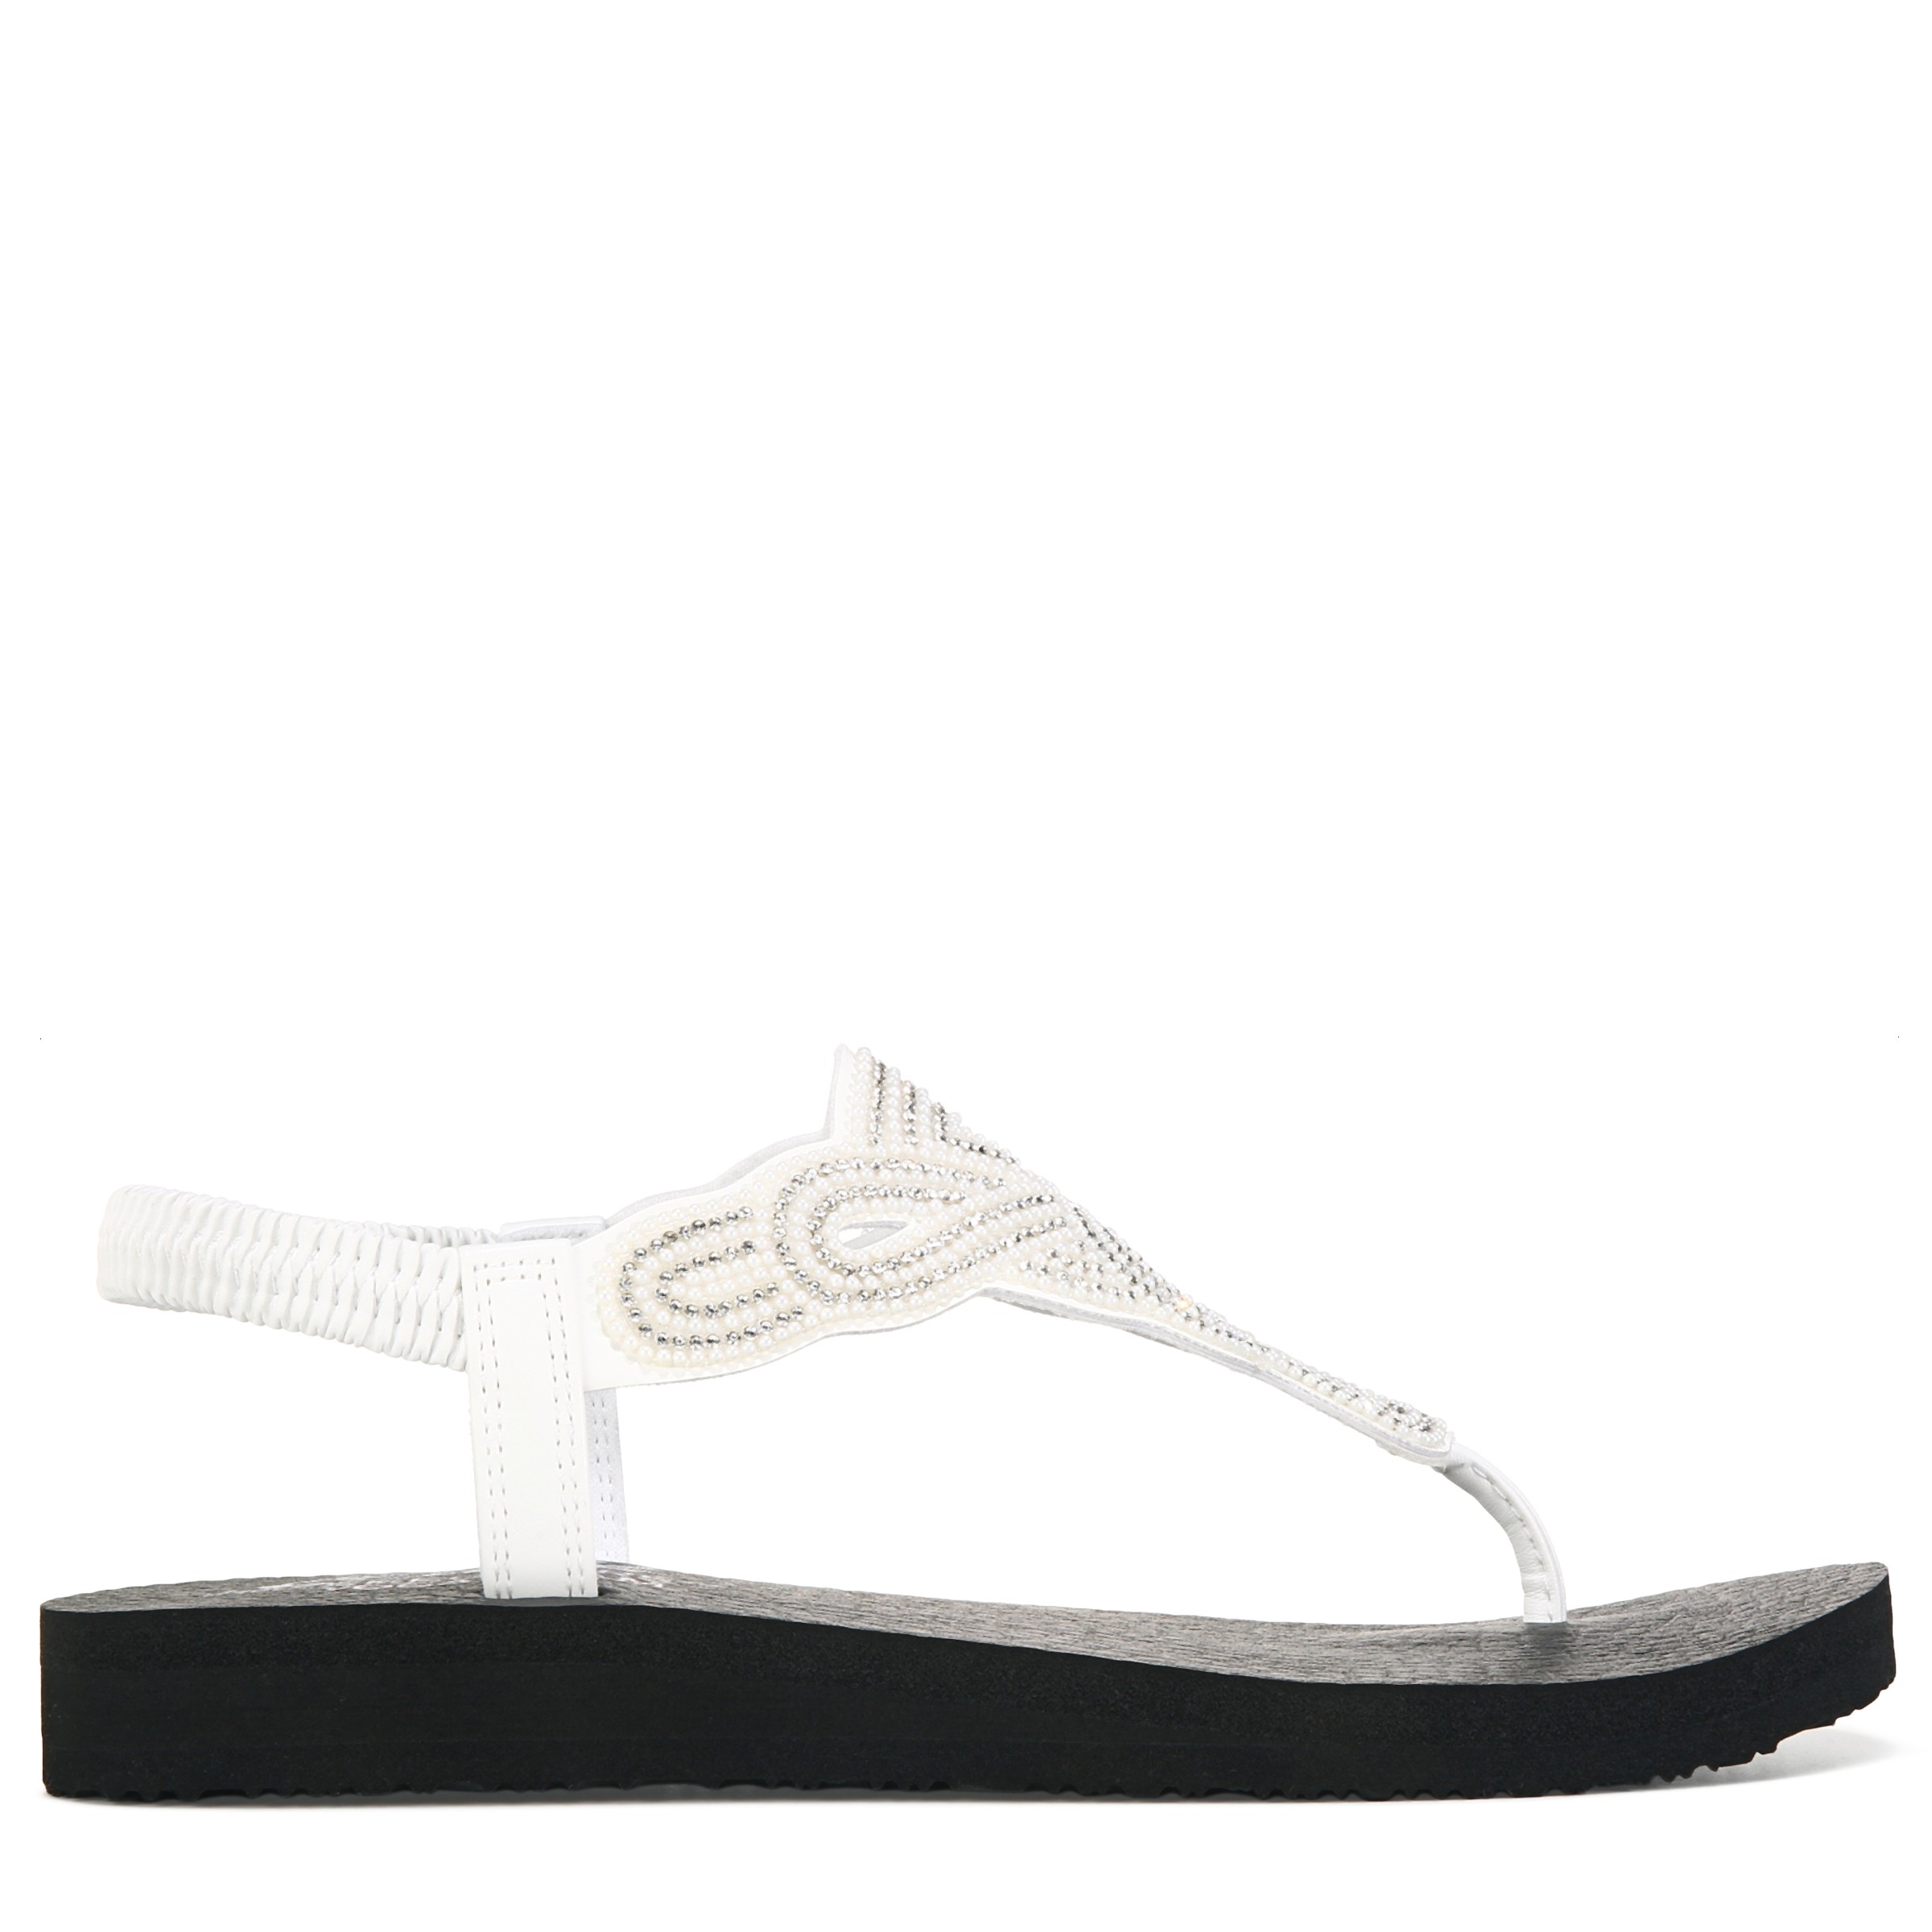 Skechers Yoga Foam Vegan Sparkle Black Womens Sandals Comfort Size 7 NWT